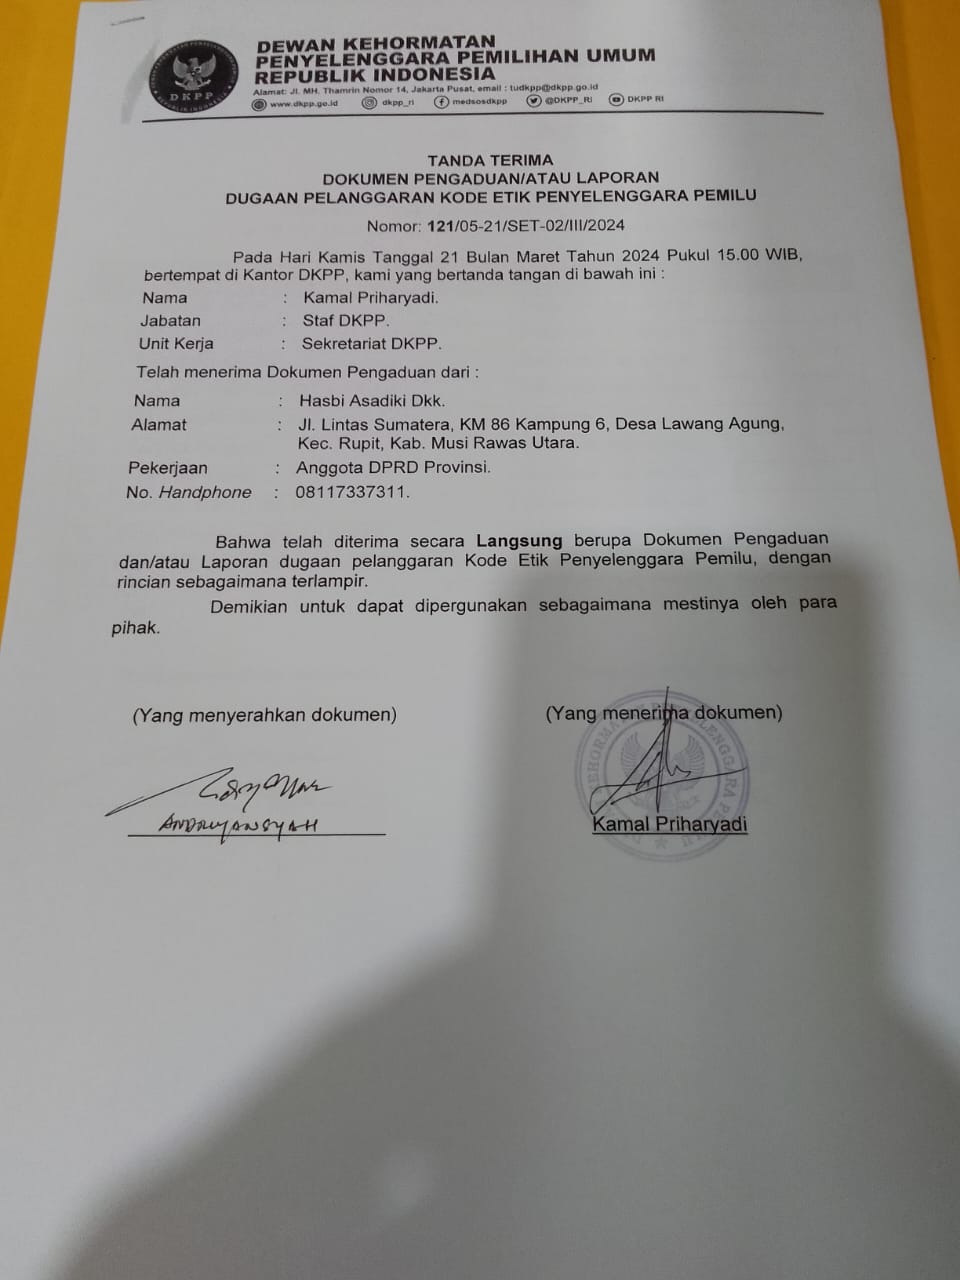 Diduga Melanggar Etik, Komisioner KPU dan Bawaslu Muratara Dilaporkan ke DKPPU RI